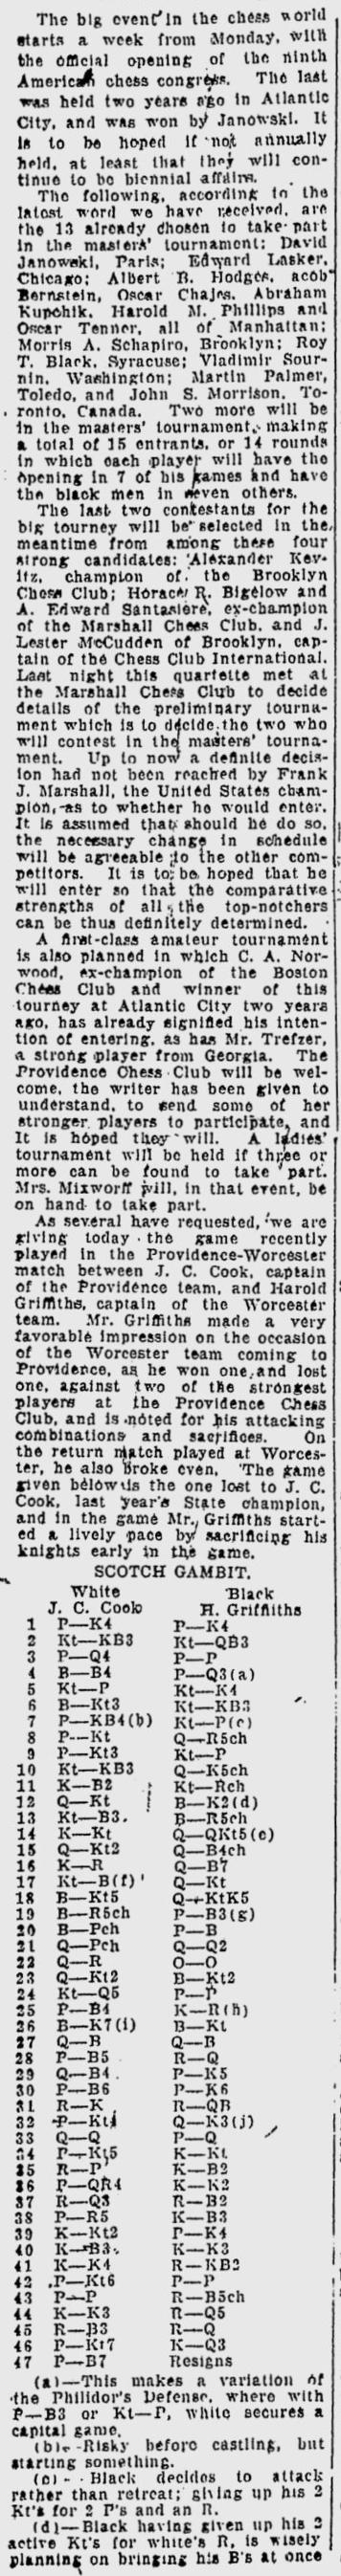 1923.07.28-02 Providence News.jpg